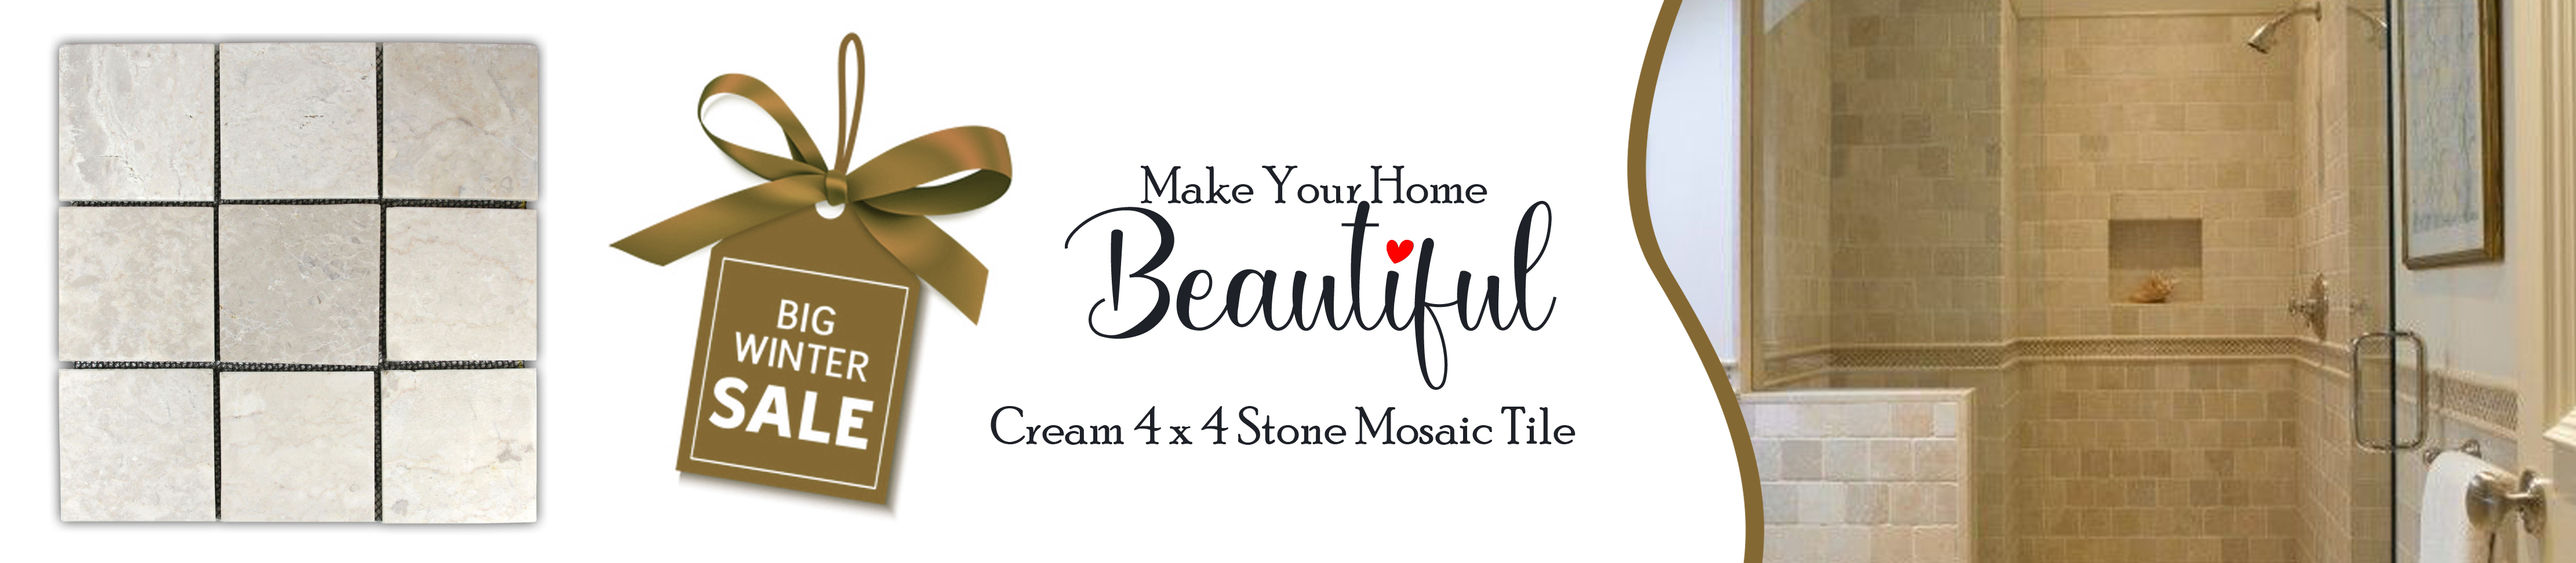 Cream-4x4-Stone-Mosaic-Tile